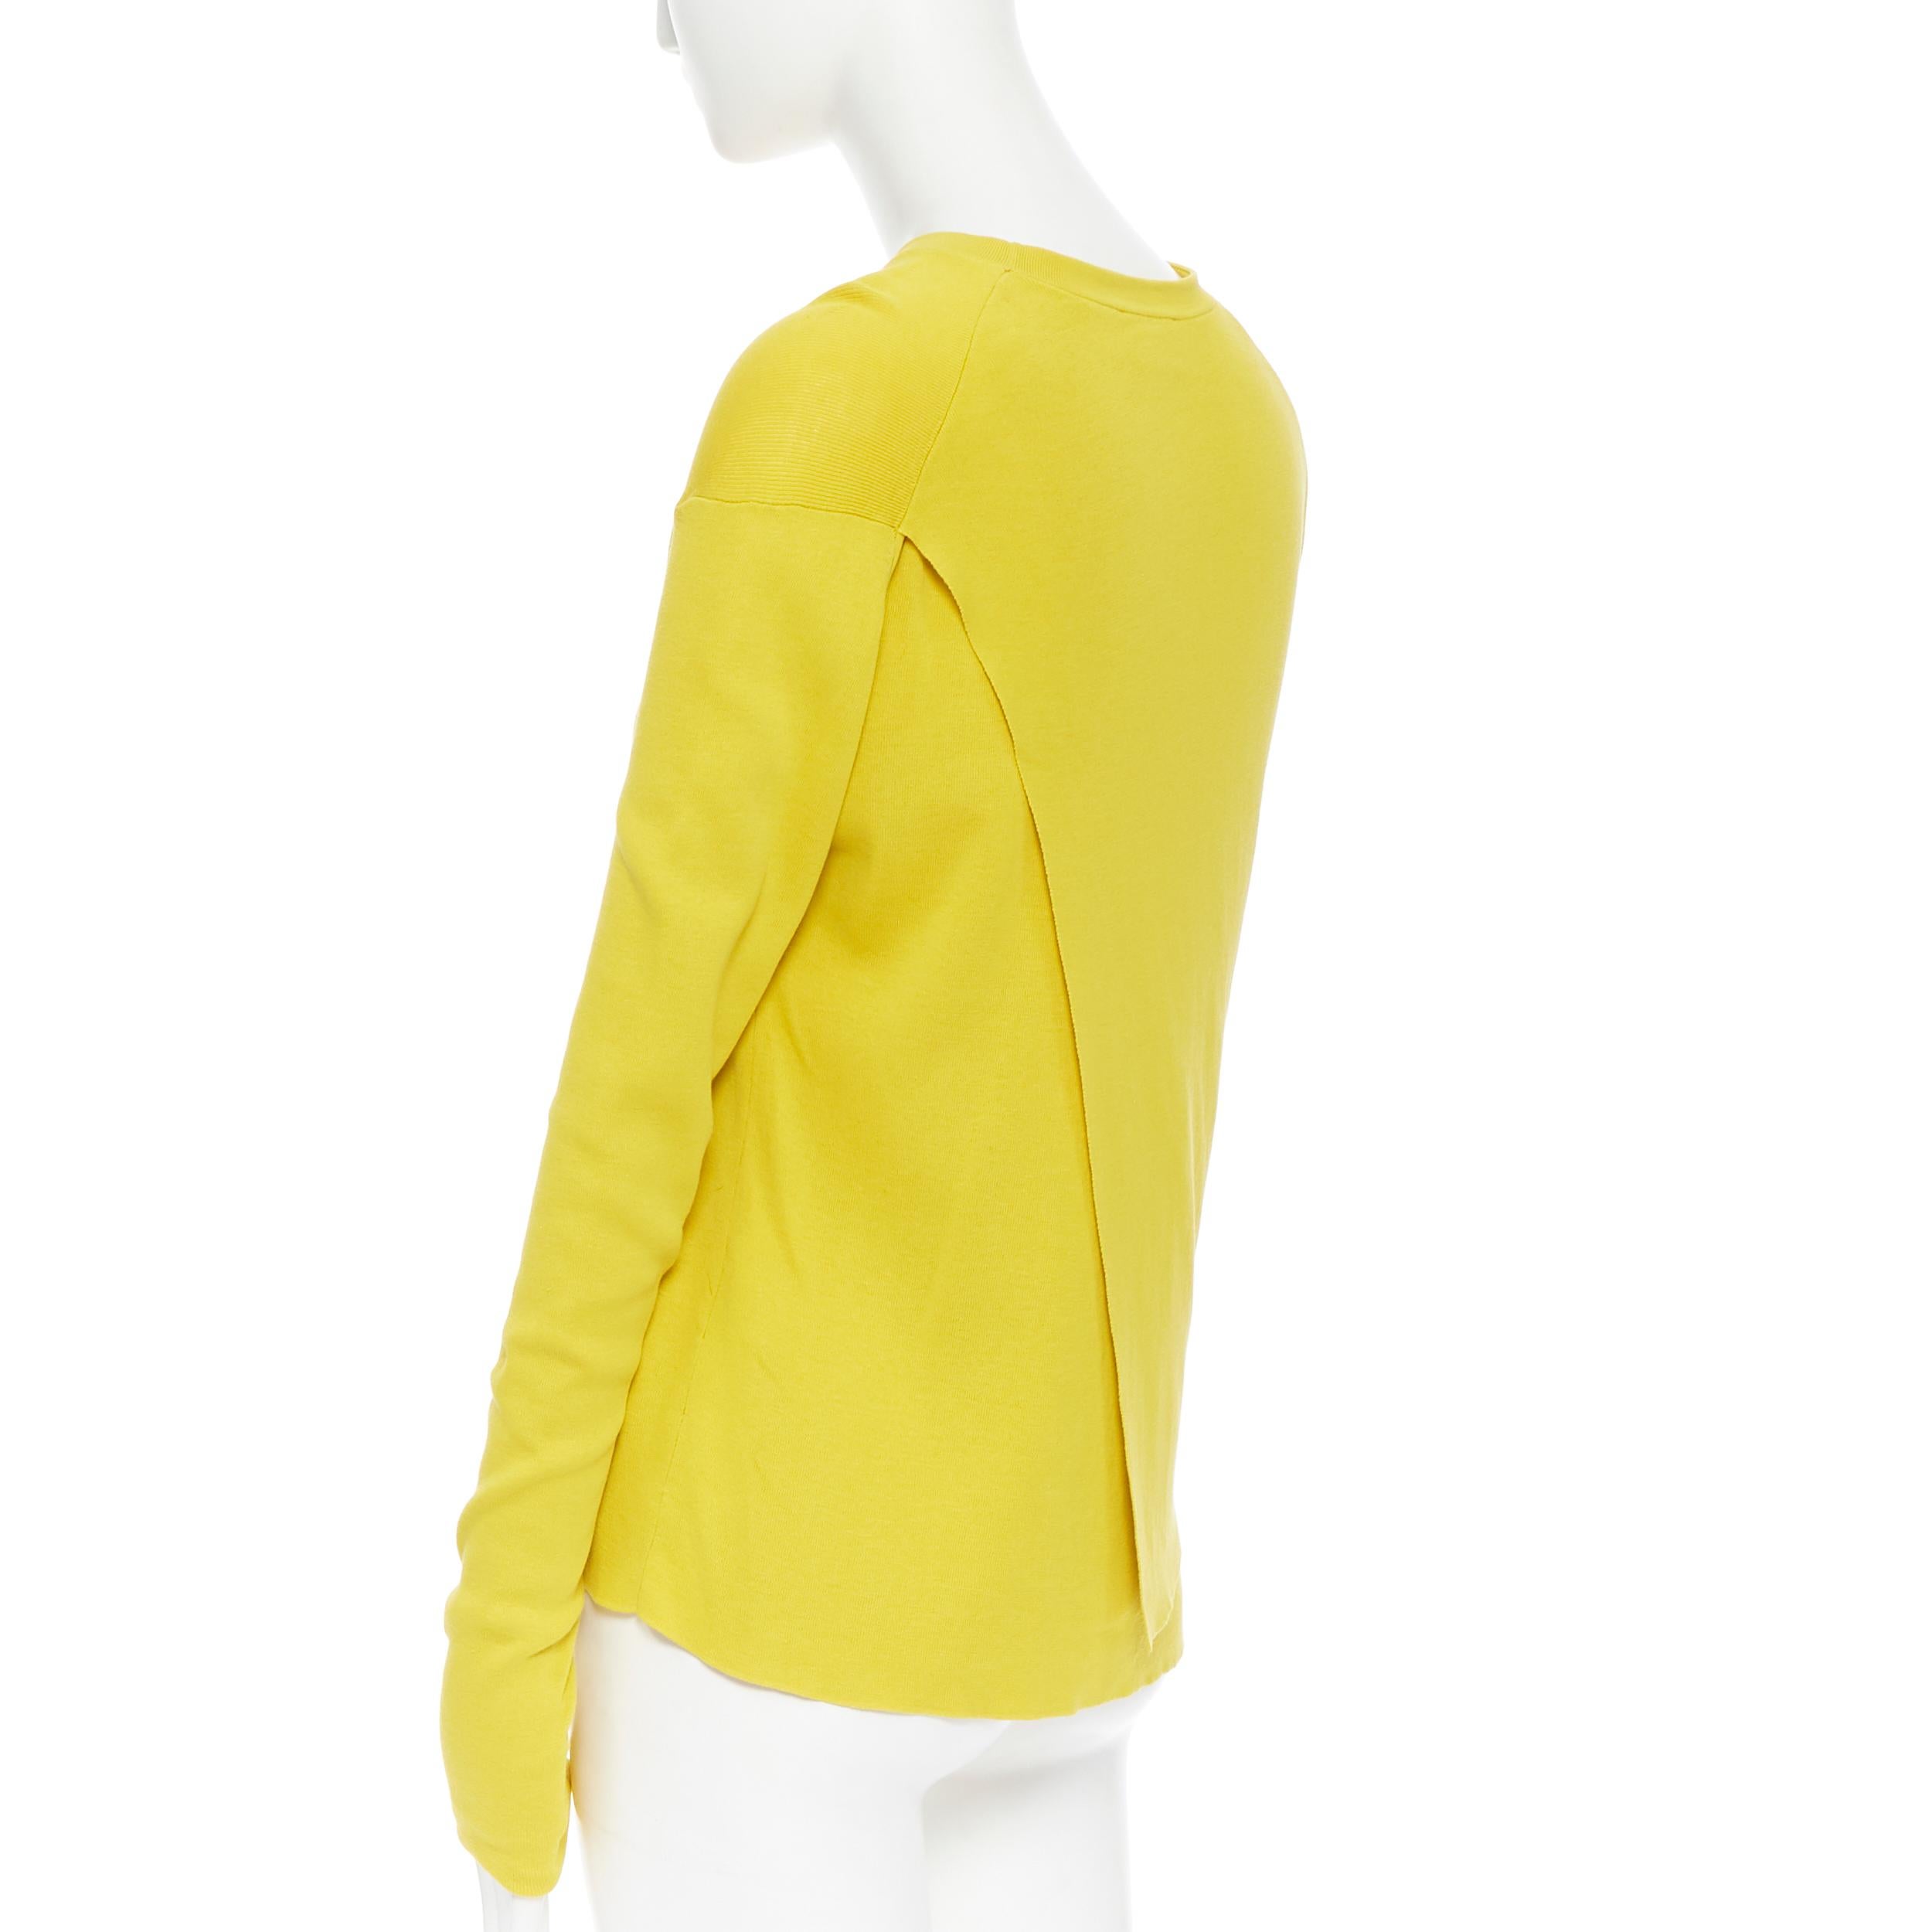 Women's ACNE STUDIOS Materia SS15 100% cotton split back sweater top S